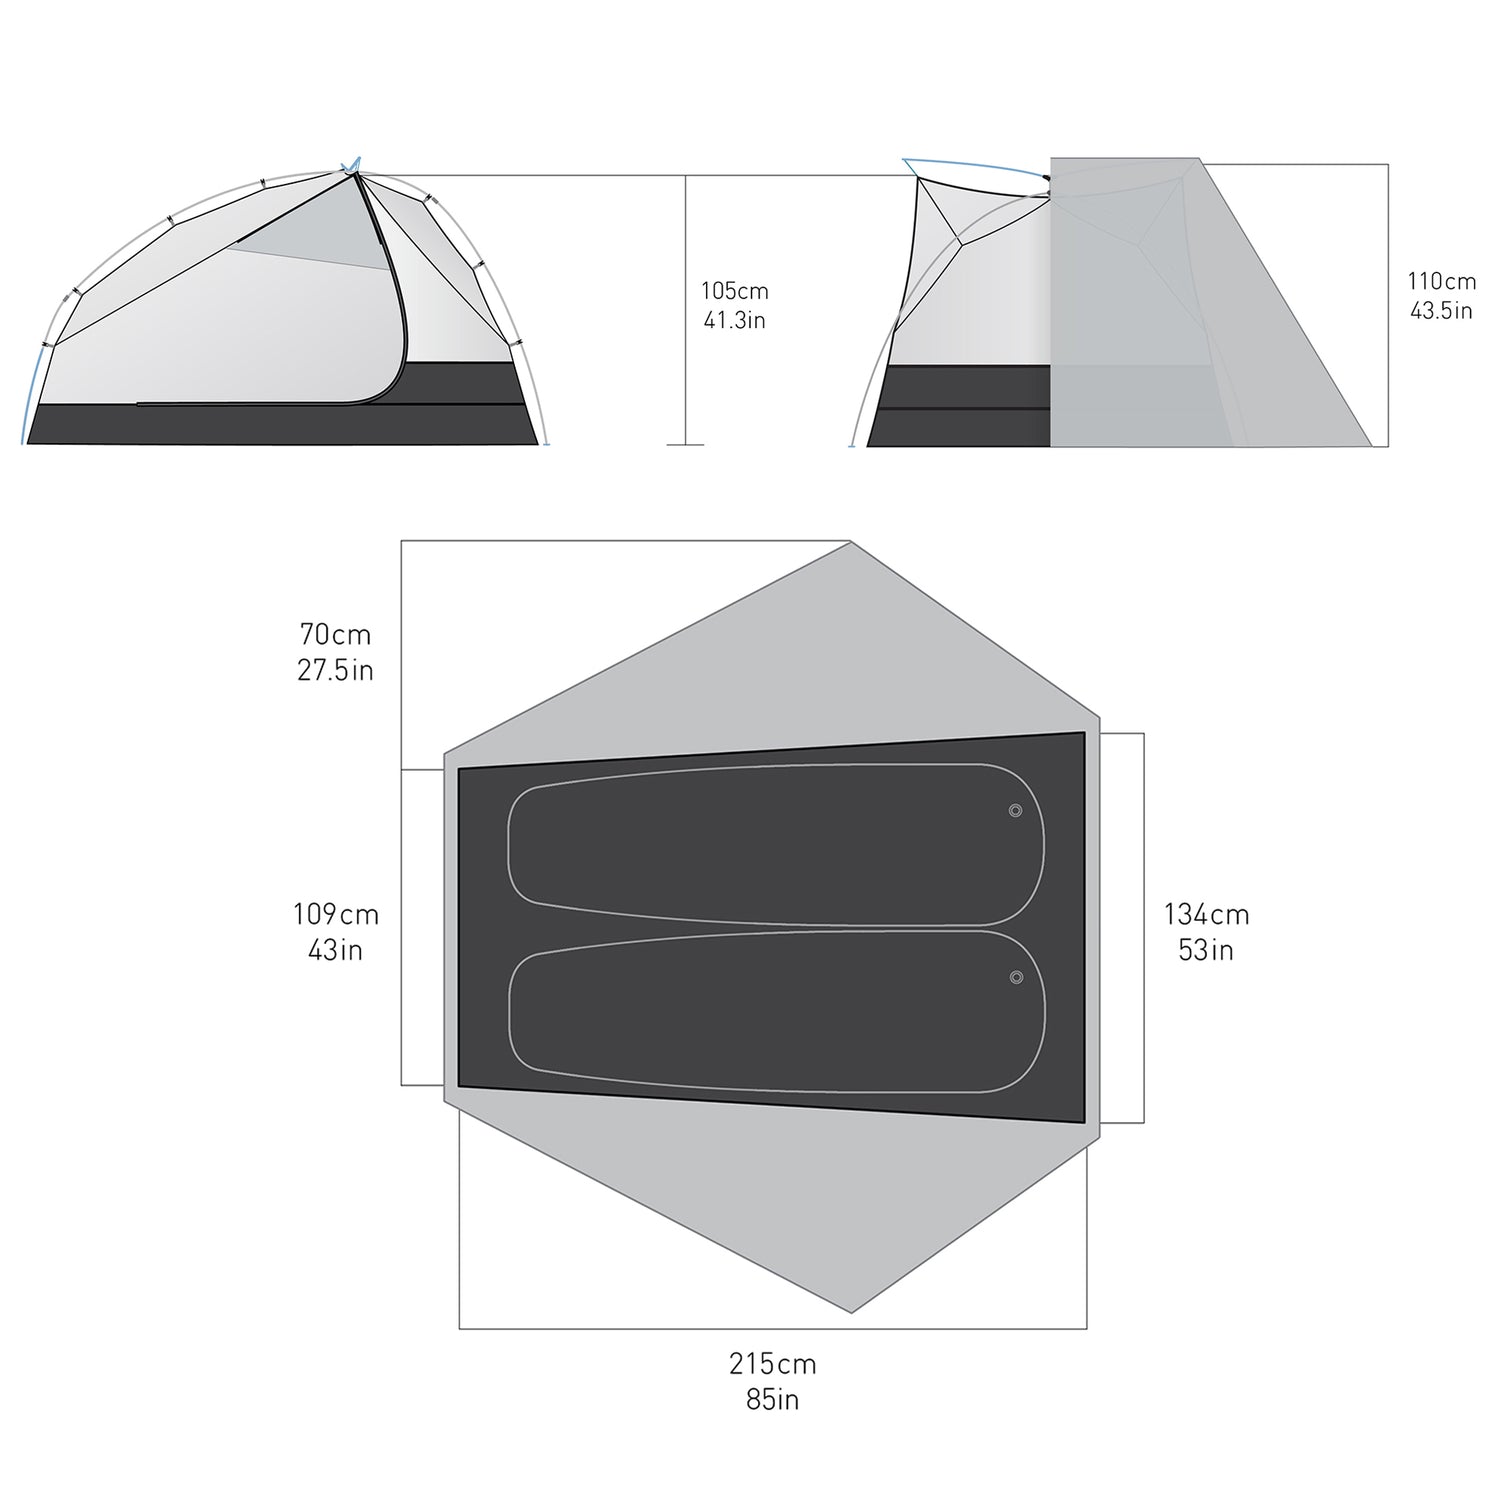 Telos Plus Freestanding Ultralight Tent